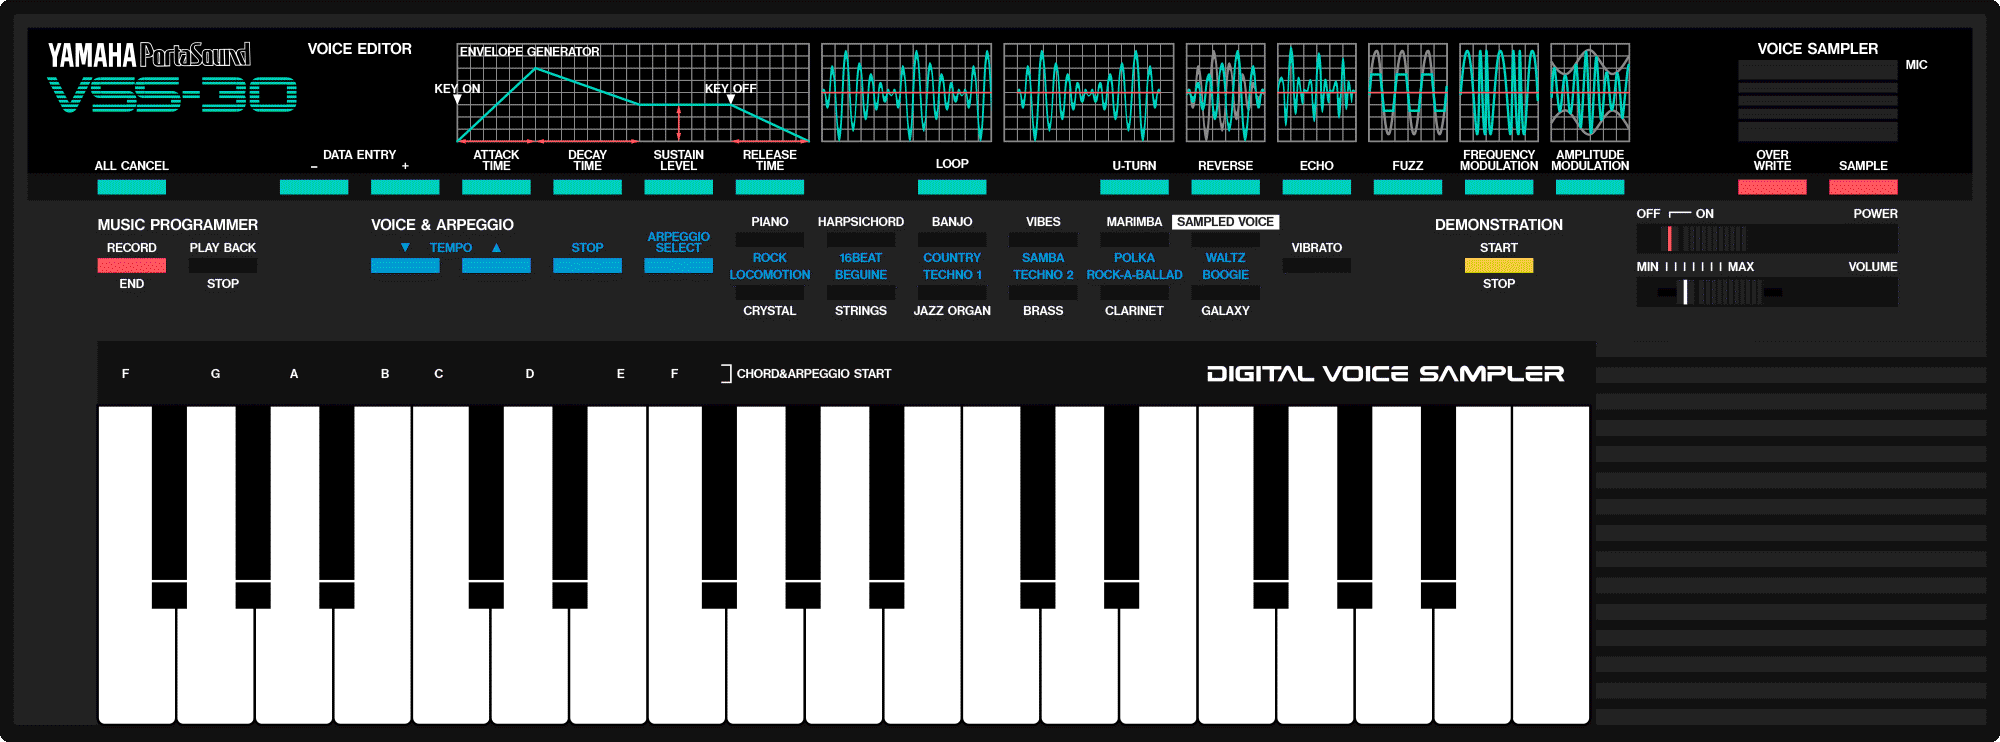 Yamaha Portasound VSS30 digital voice sampler